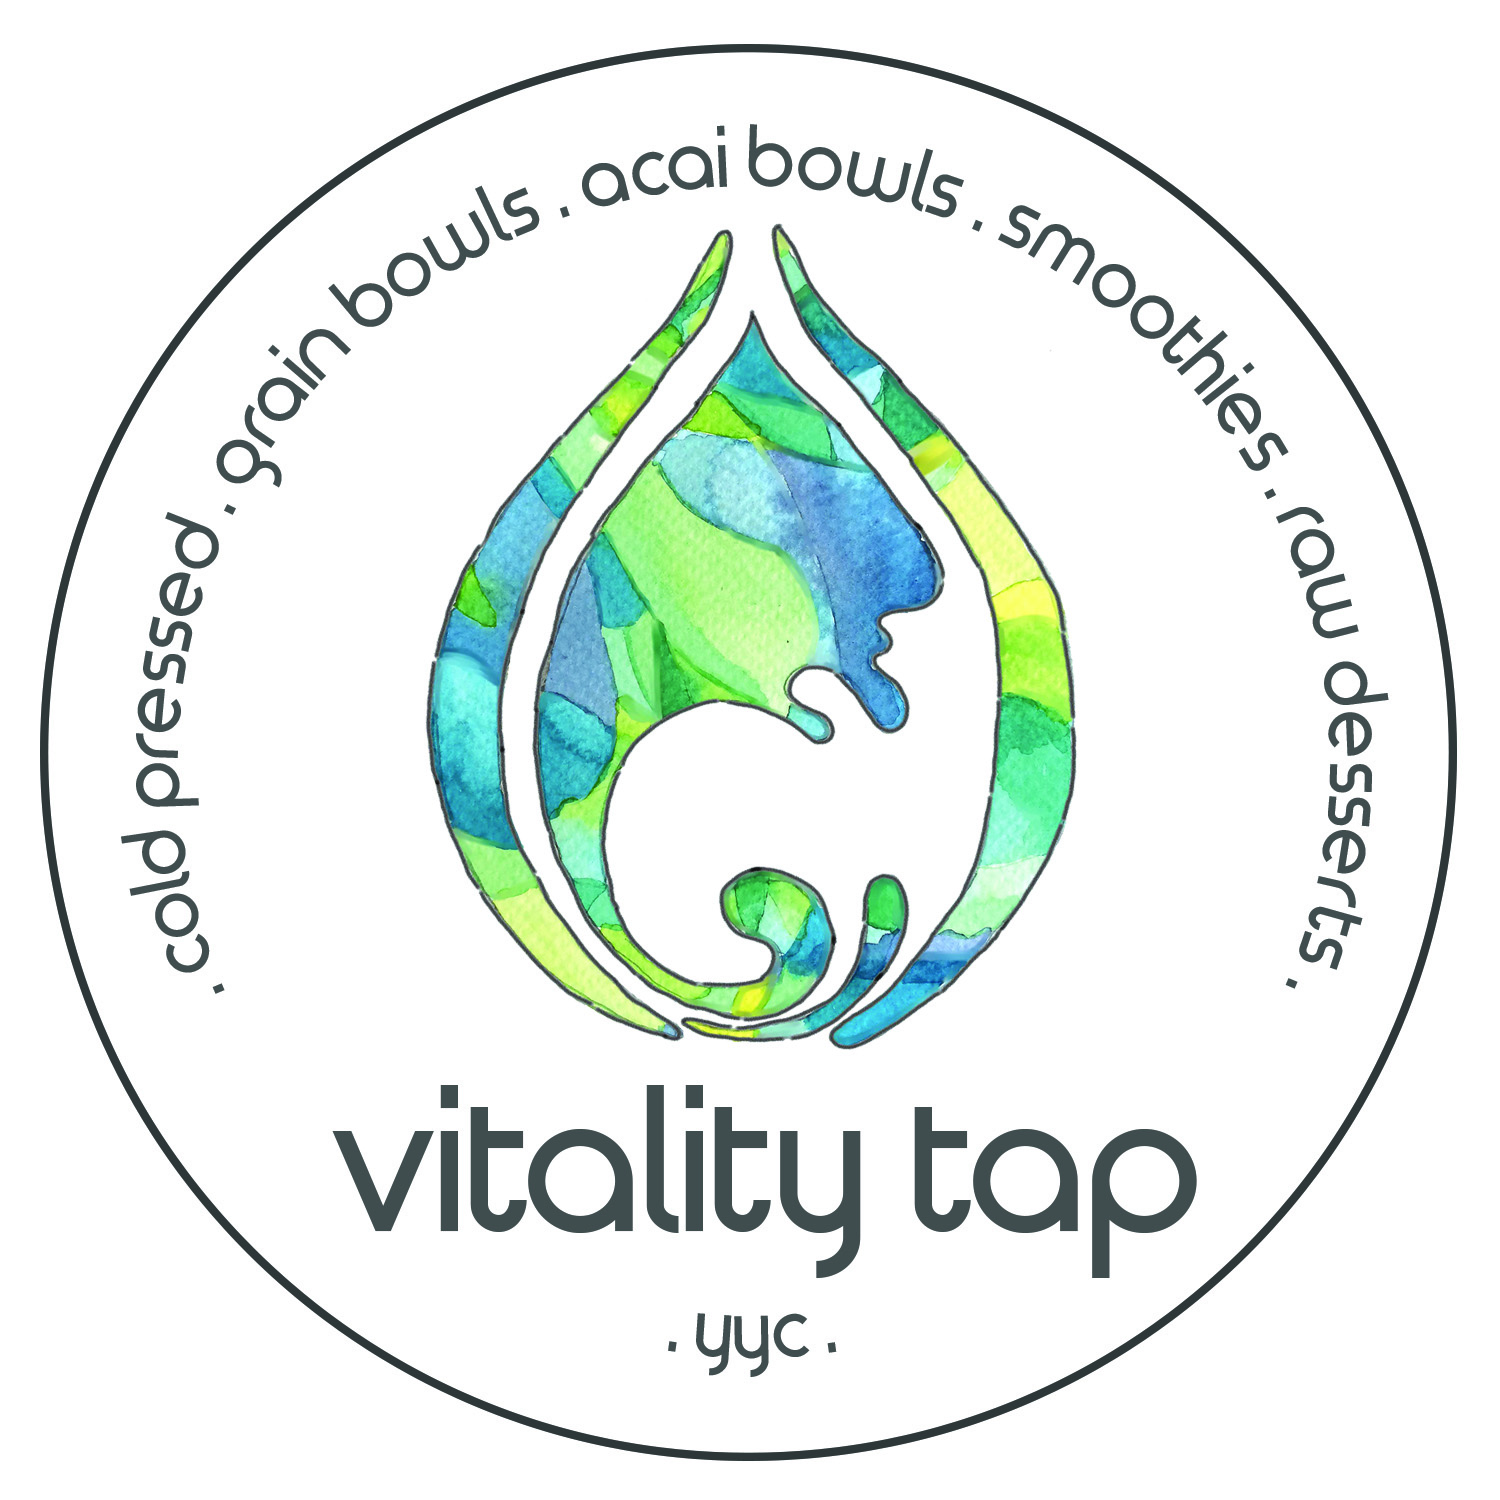 - vitality tap yyc -